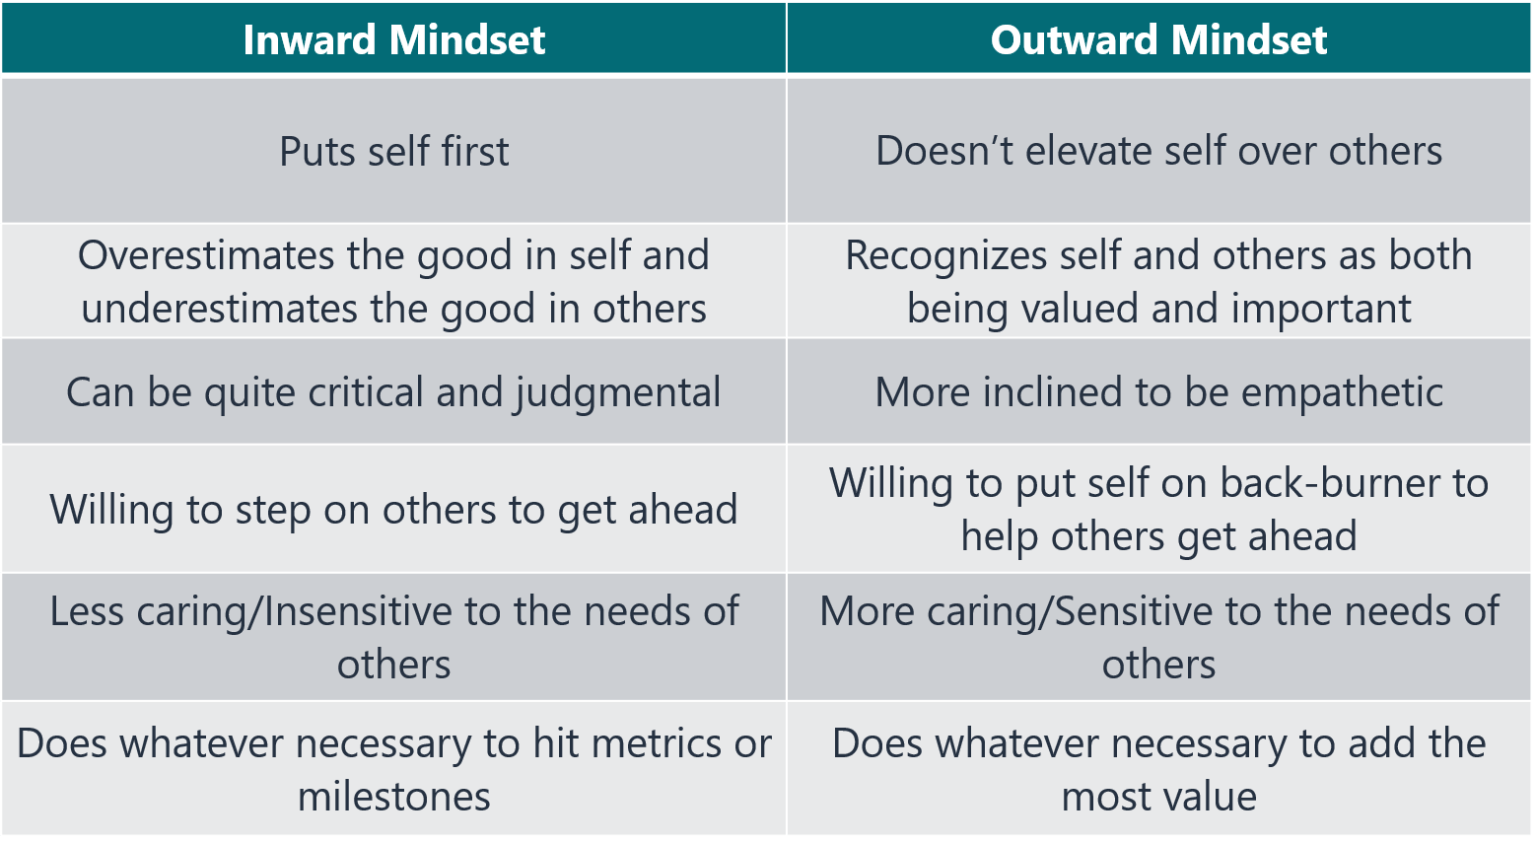 the outward mindset